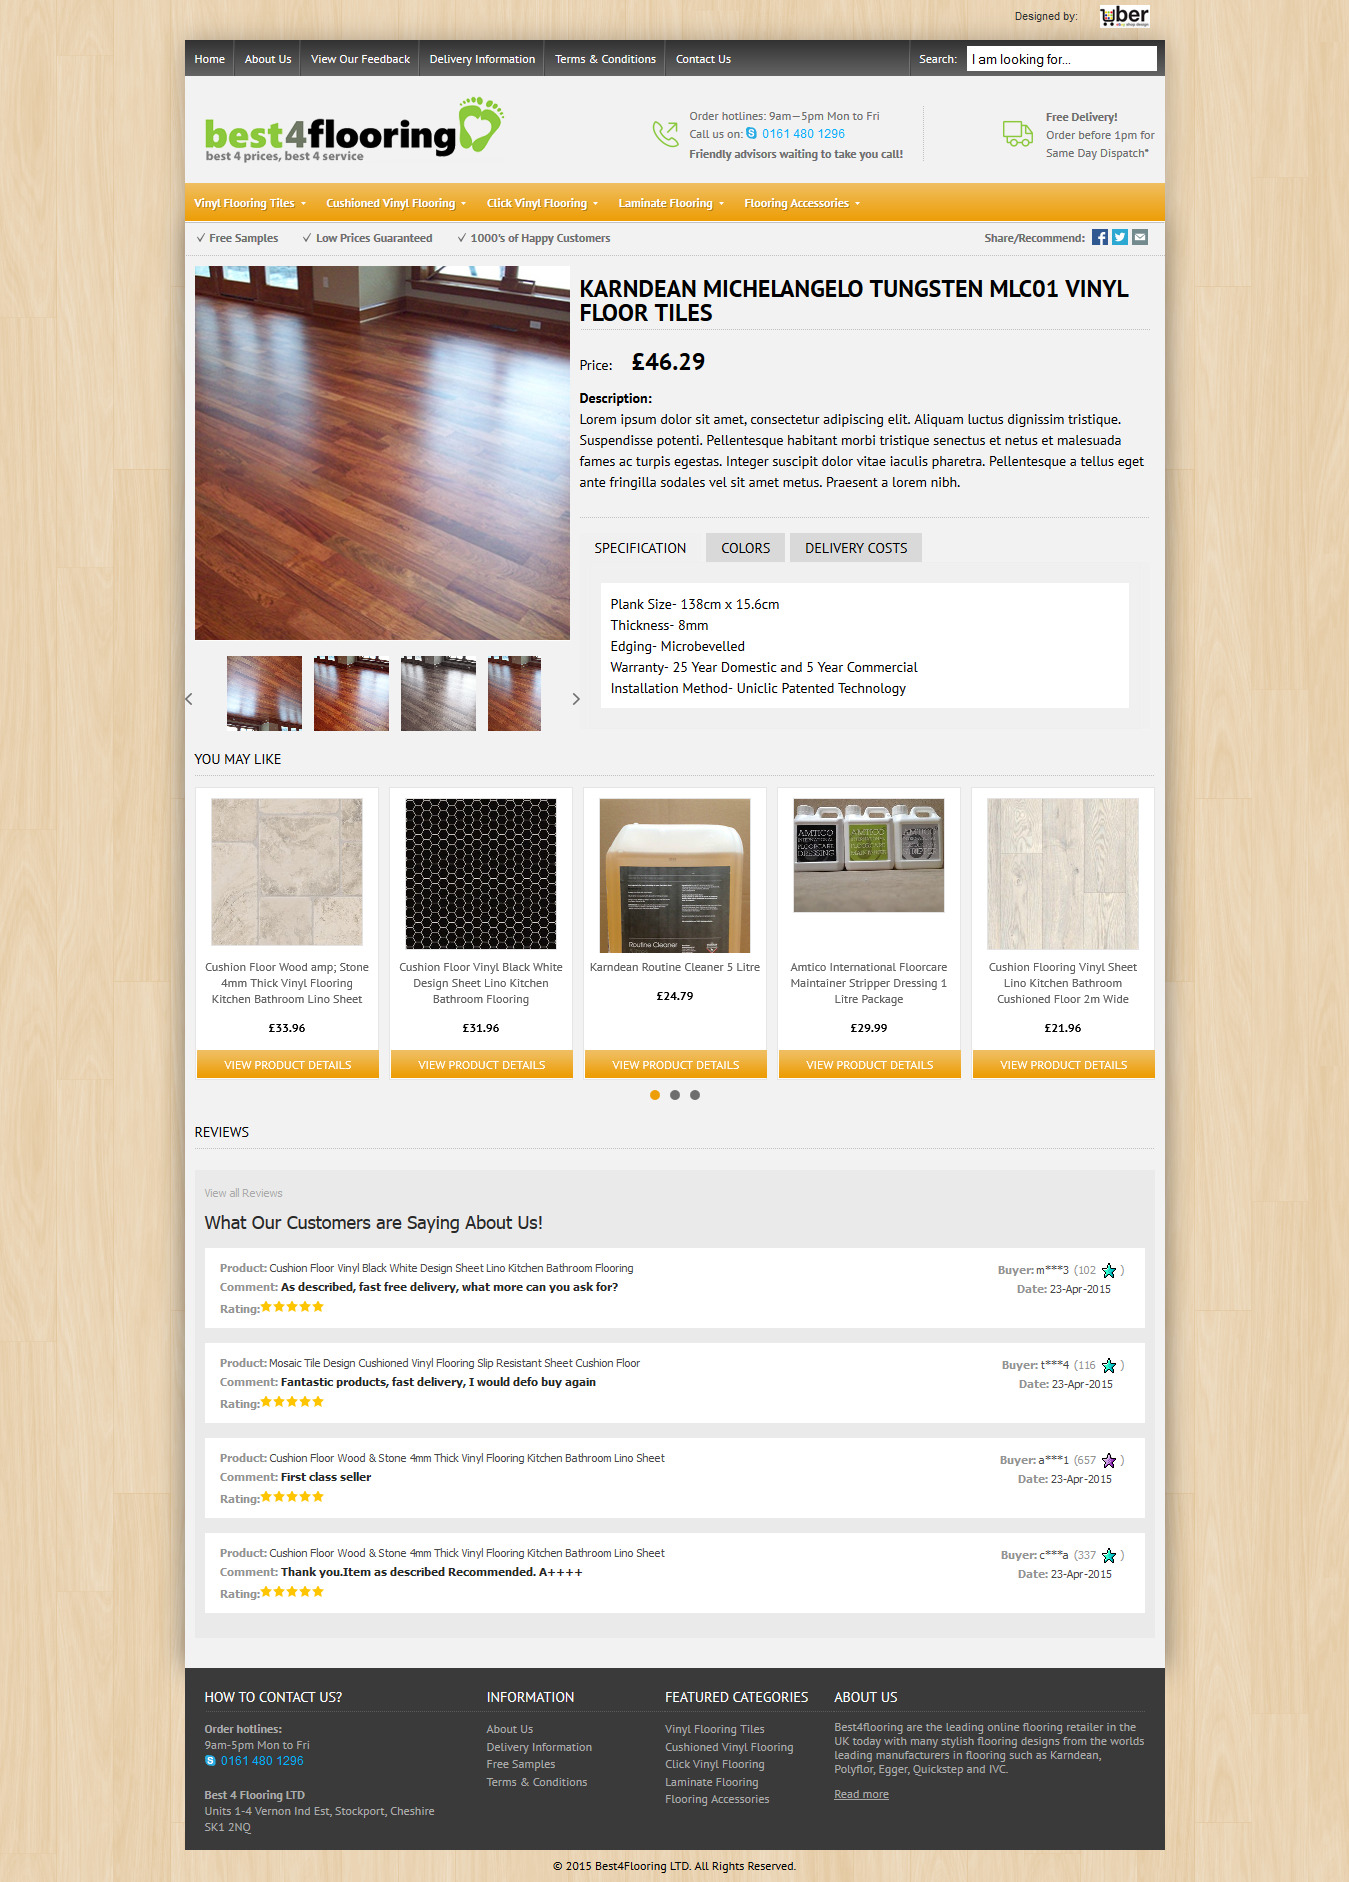 Best 4 flooring ebay item template